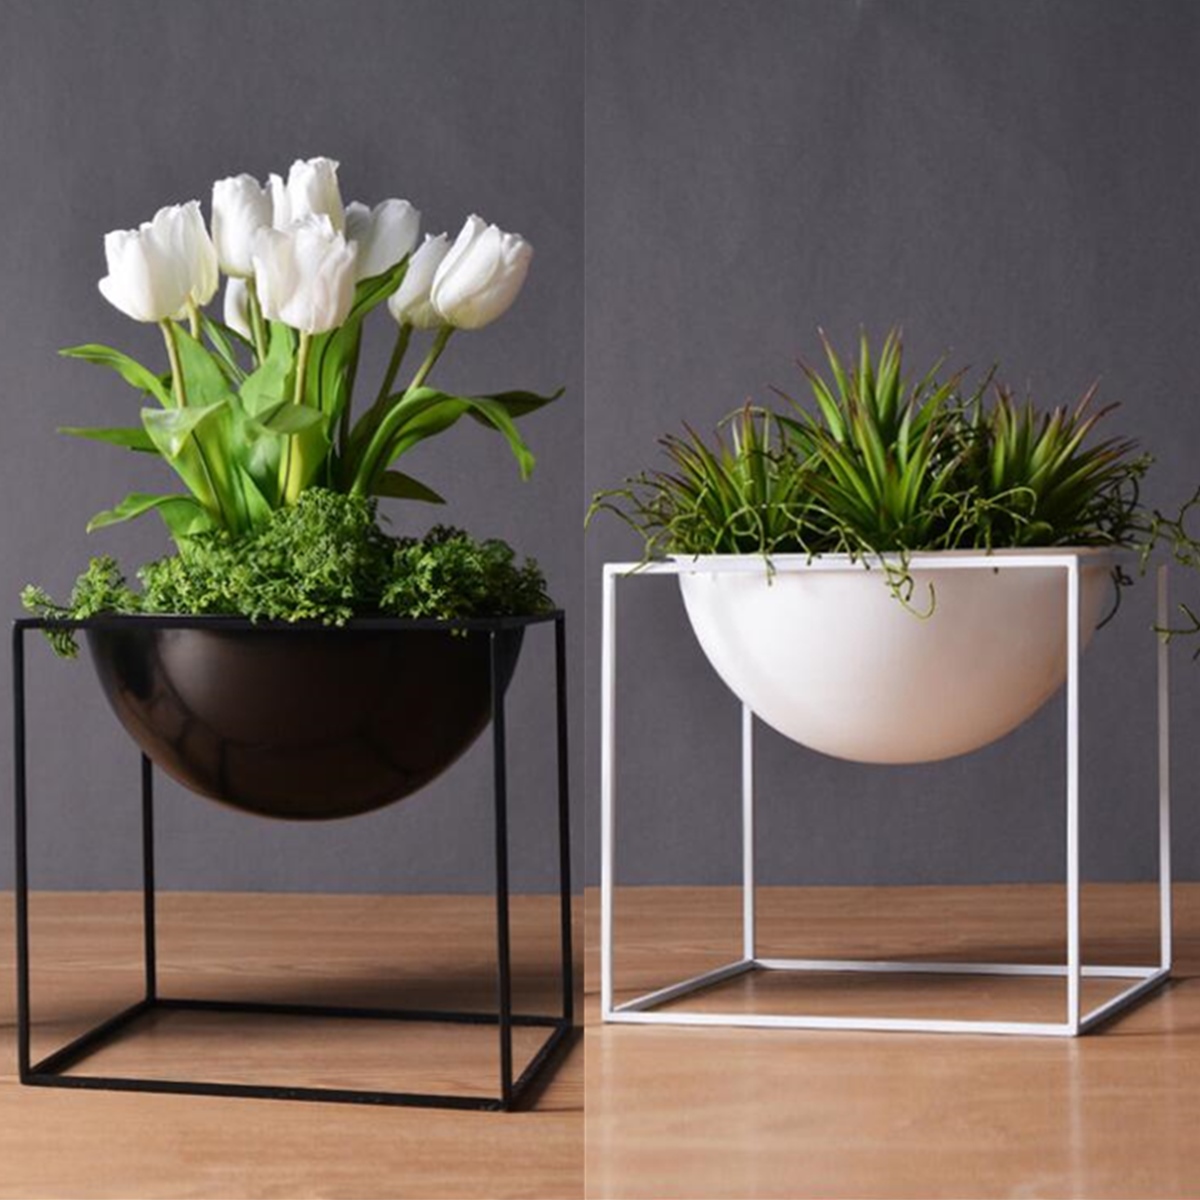 20cm-Flower-Pot-Holder-Metal-Pot-Stand-Planter-Garden-Home-Decorations-Flower-Display-Rack-1295658-1